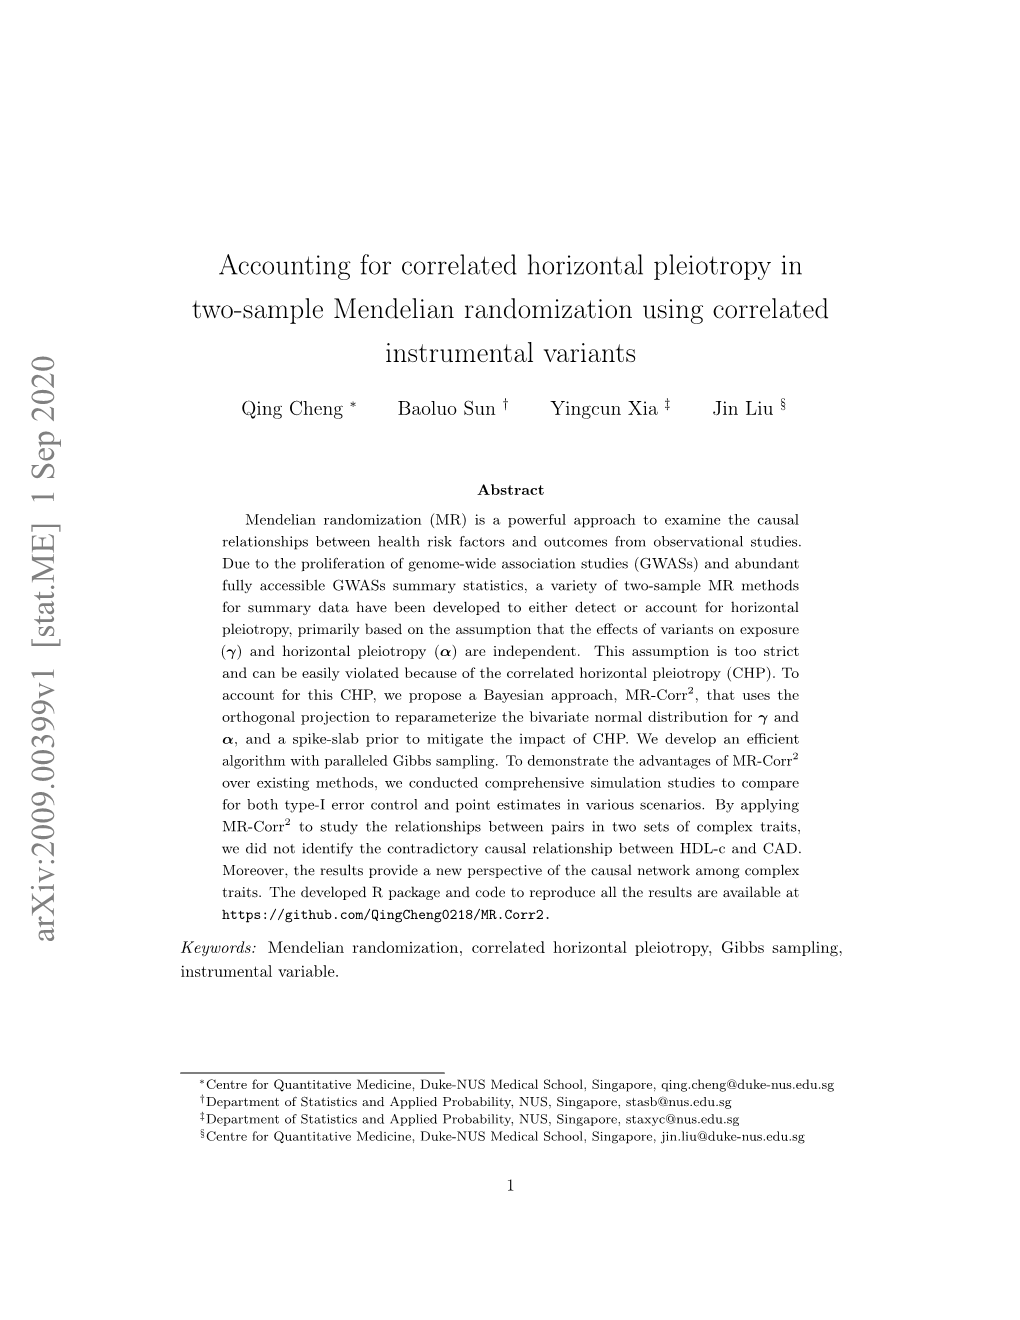 Accounting for Correlated Horizontal Pleiotropy in Two-Sample Mendelian Randomization Using Correlated Instrumental Variants